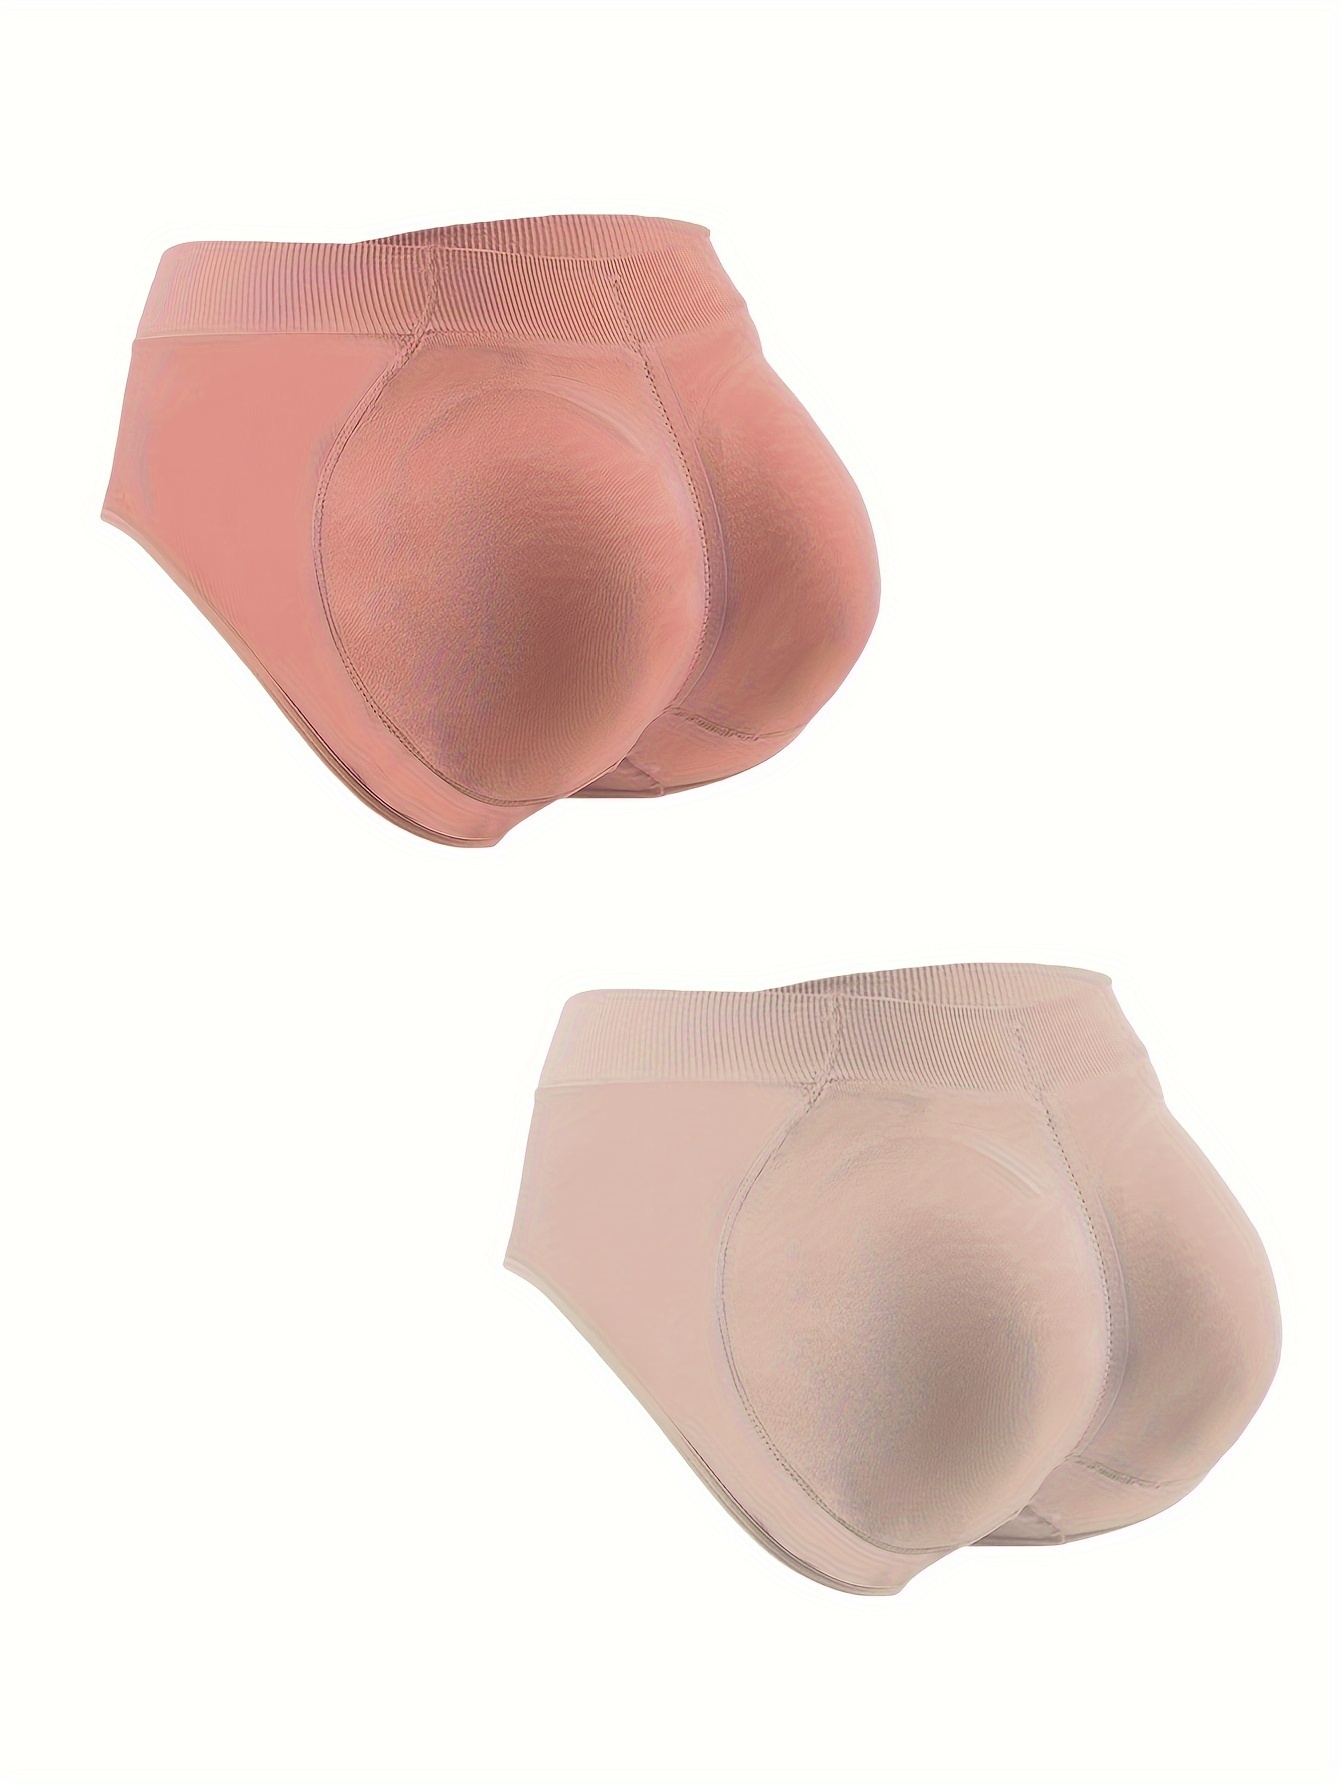 Generic Women Padded Bum Pants Butt Lifter Panty Body Enhancer